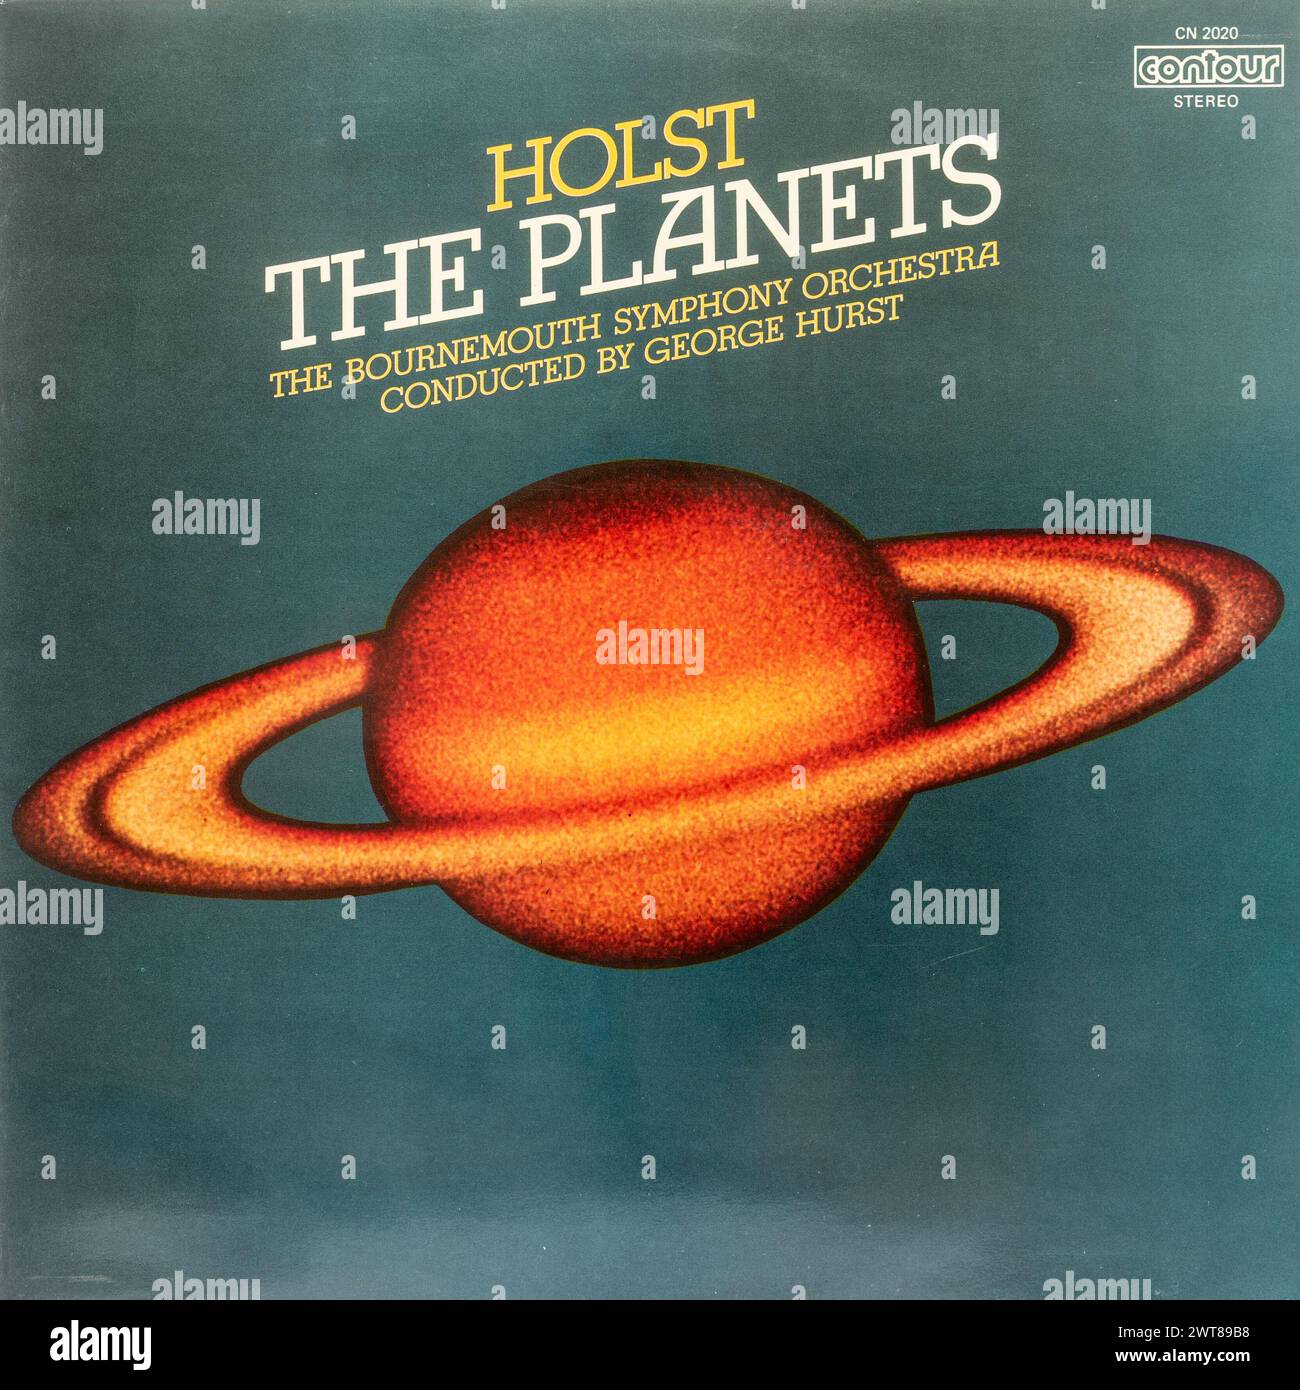 Holst The Planets, vinyl LP record album cover Stock Photo